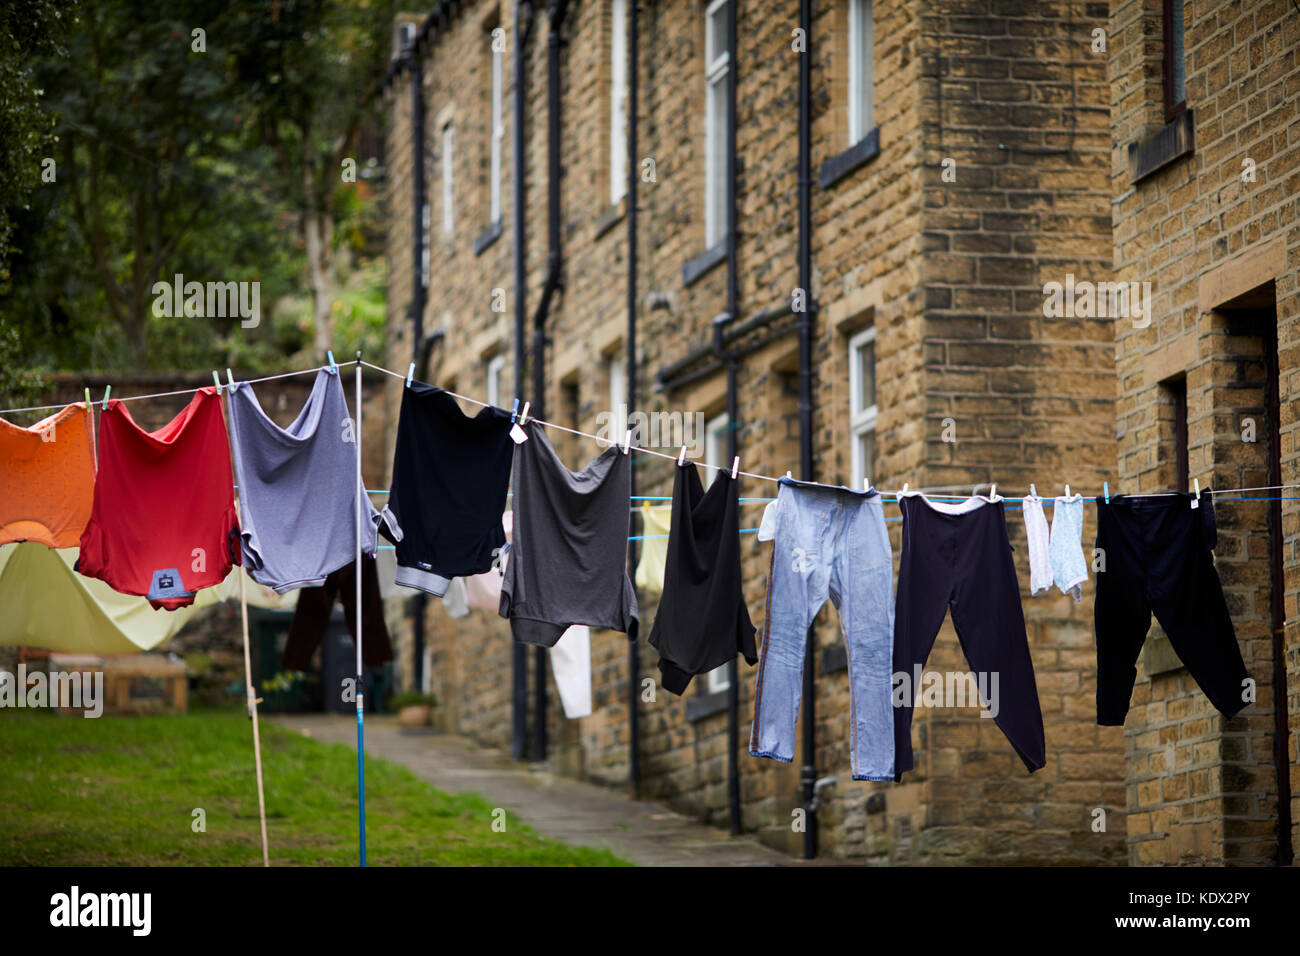 Pennines village, Haworth in West Yorkshire, England. laundry washing line near Oak Street Stock Photo